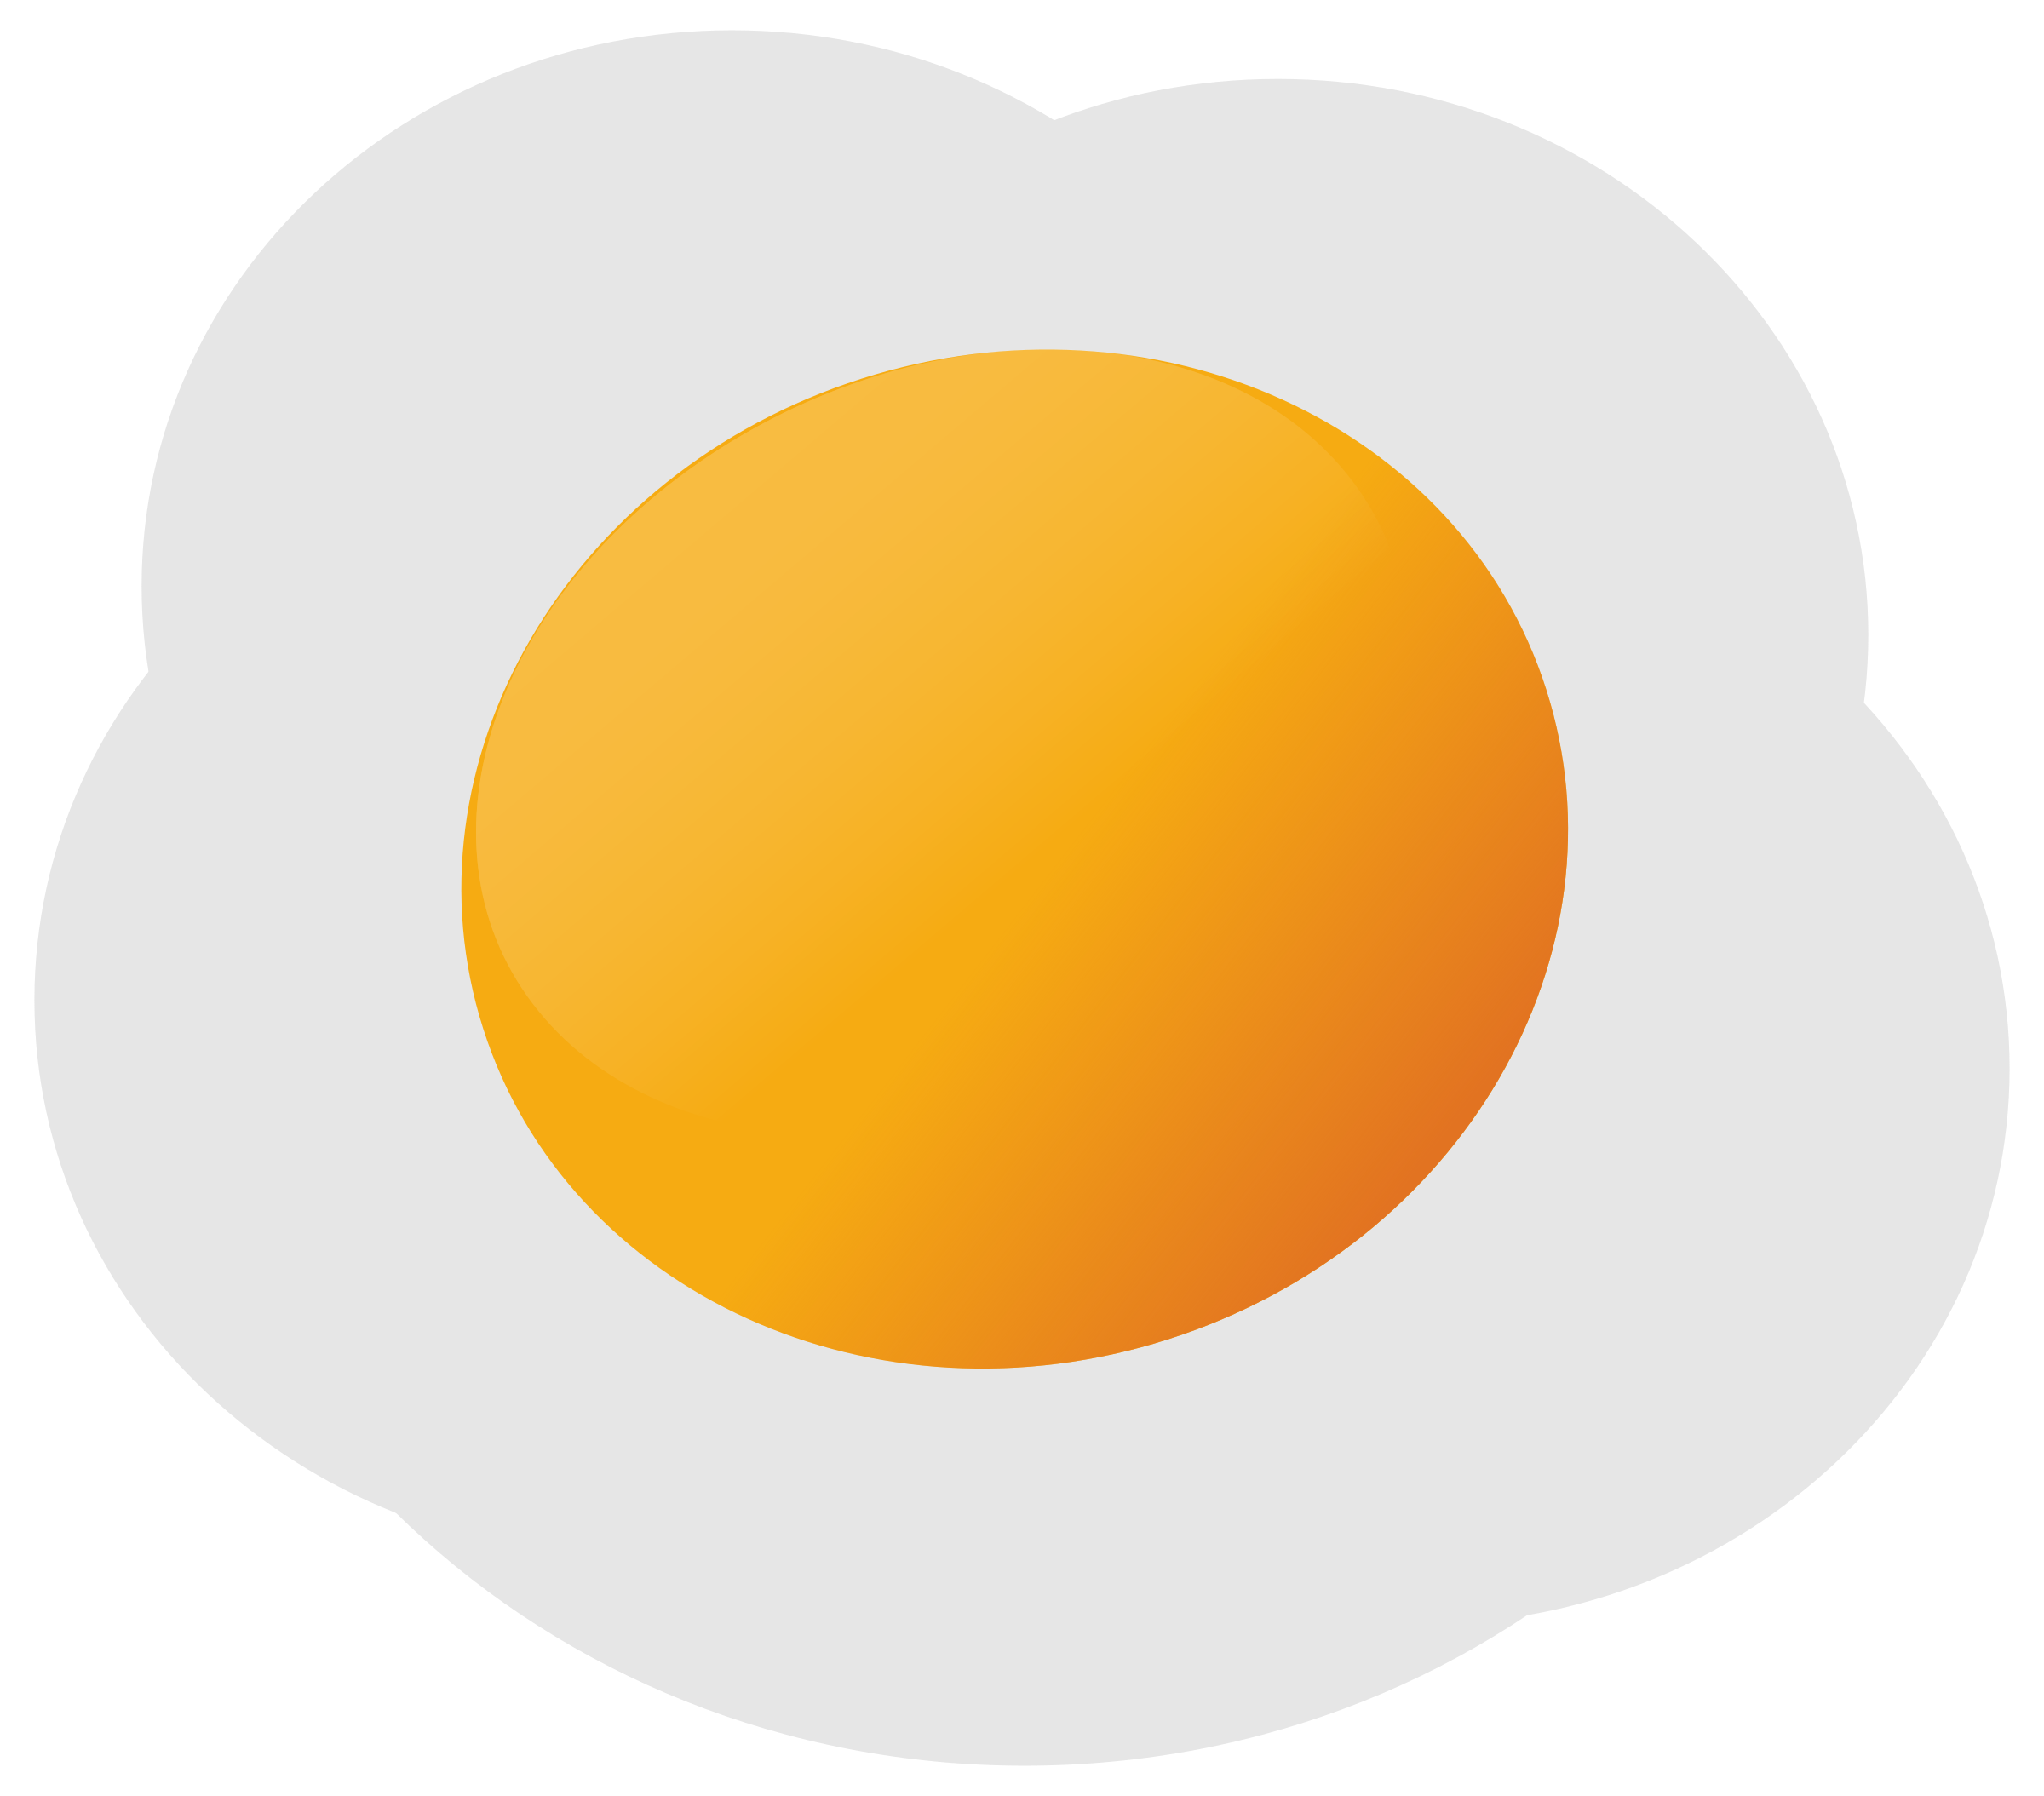 Fried Egg  Food png, Food icons, Food